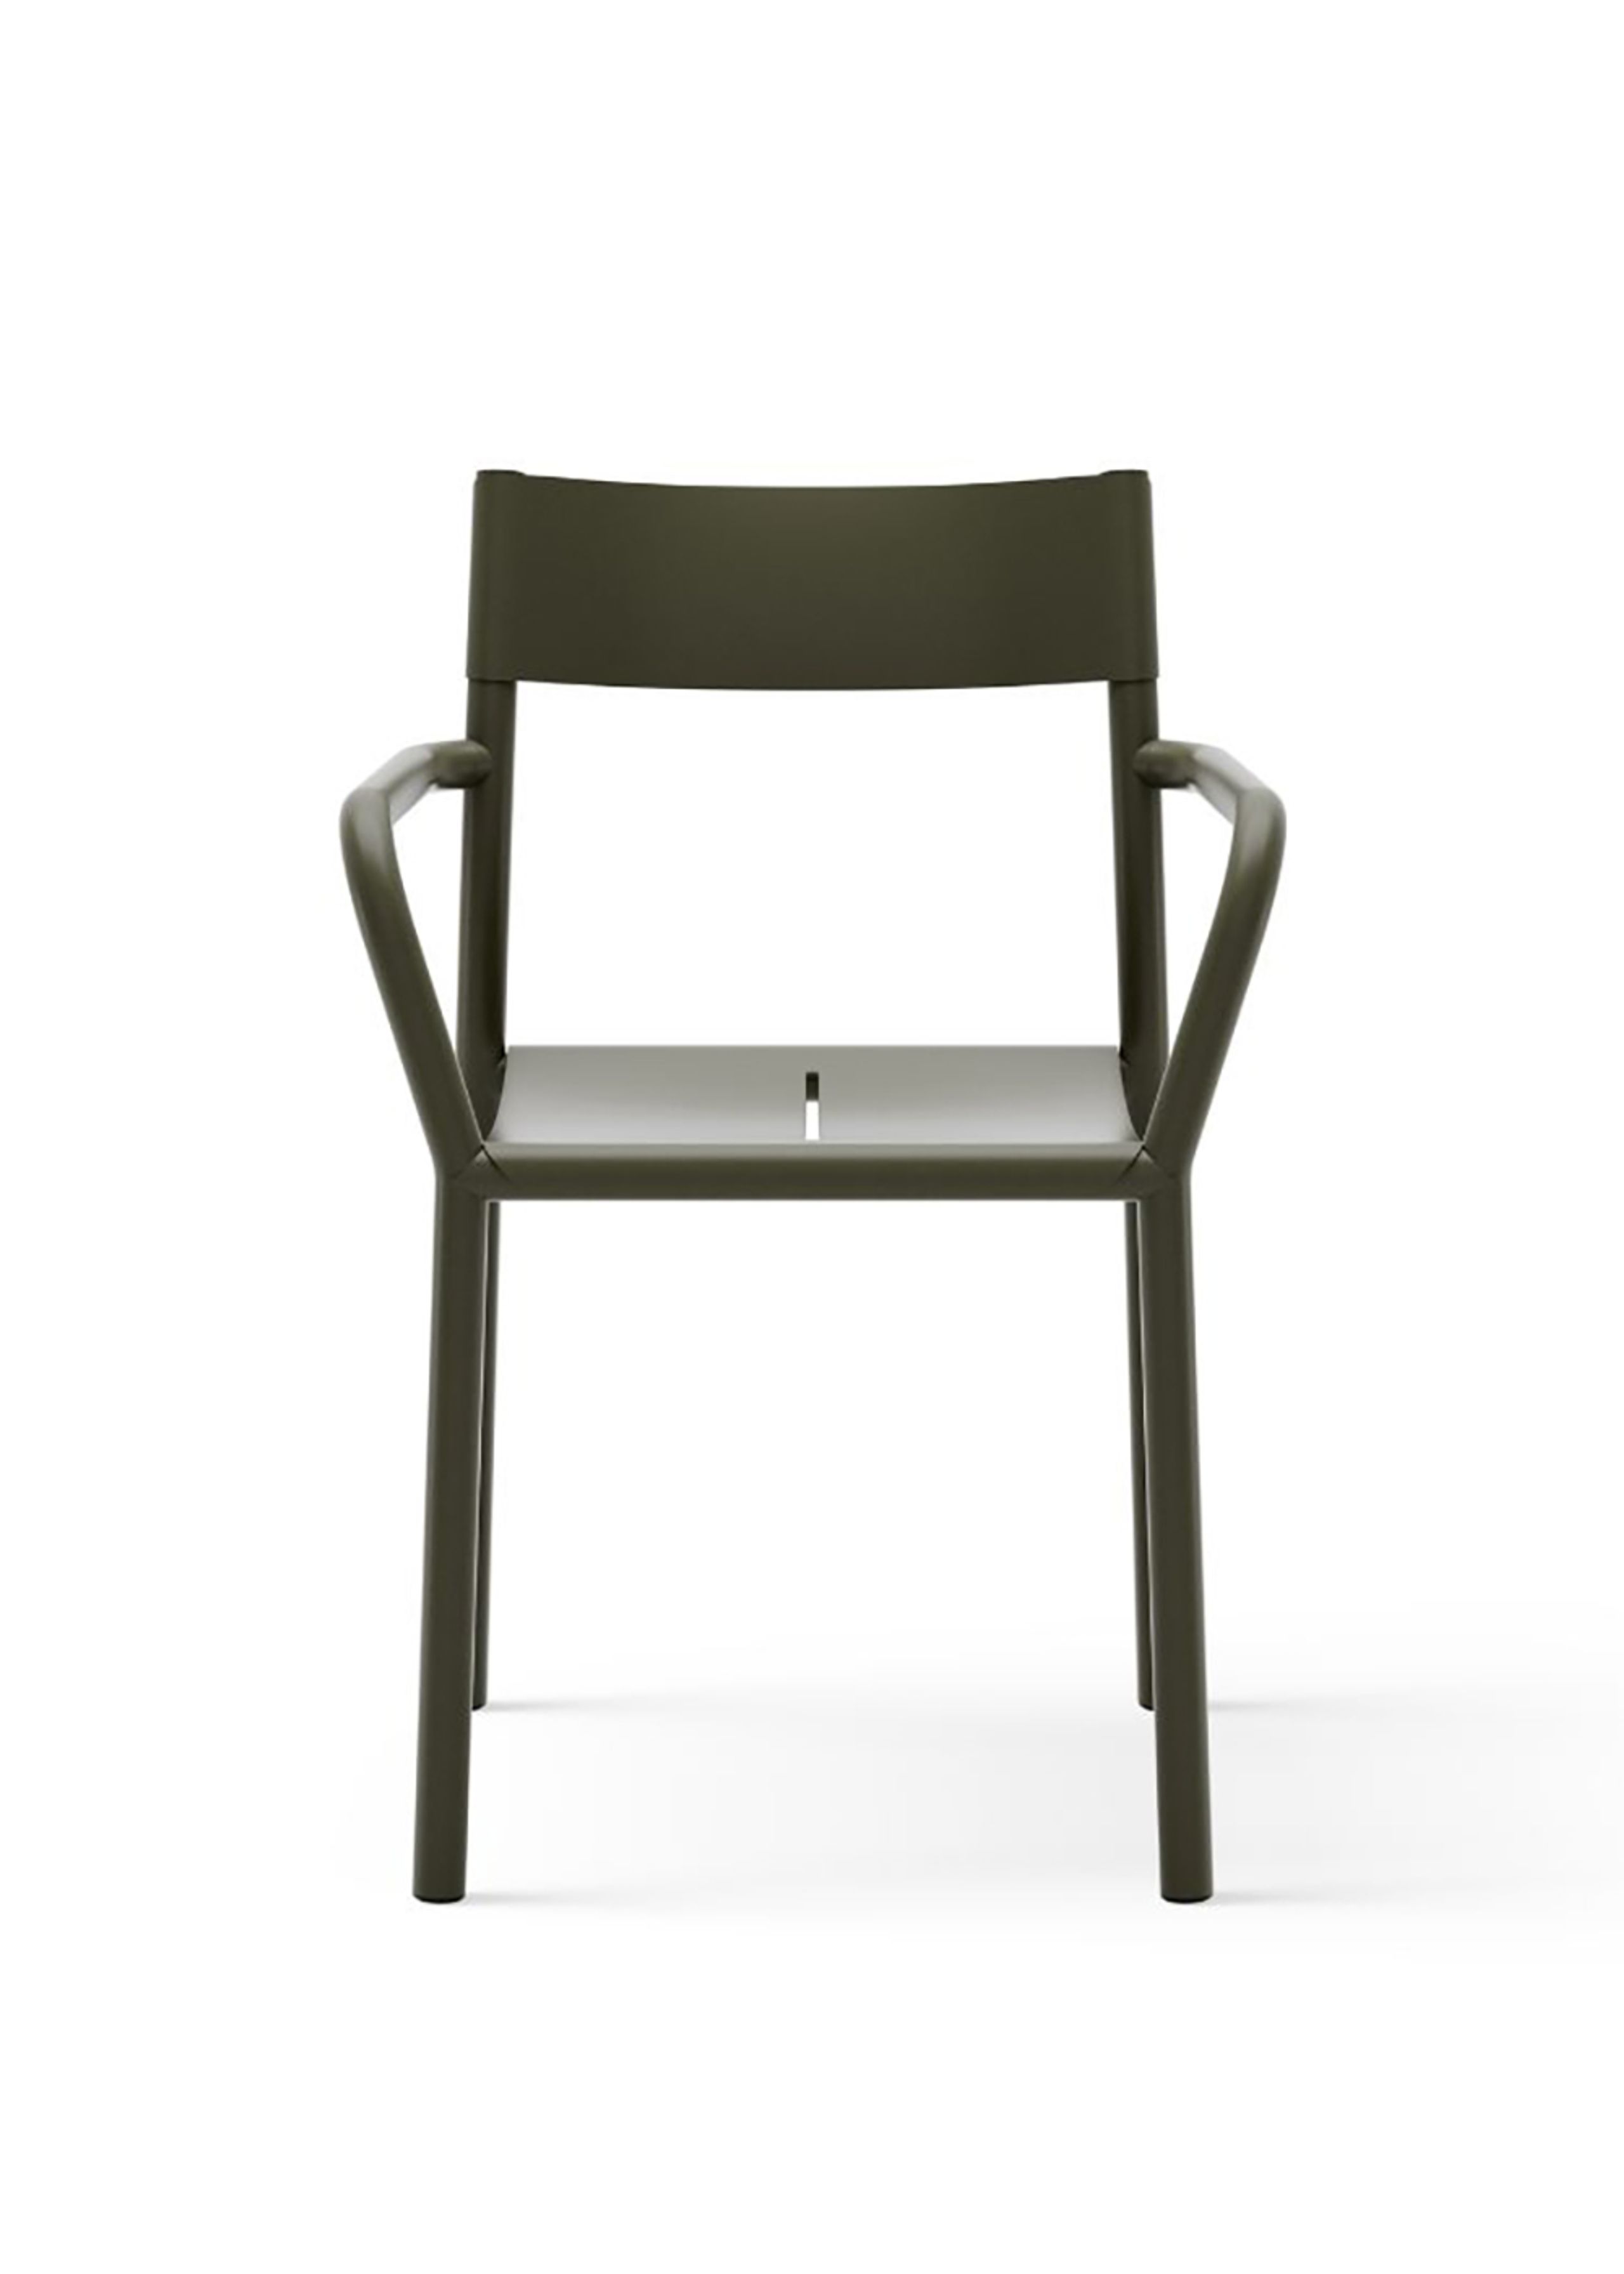 New Works - Chaise de jardin - May Armchair - Dark Green